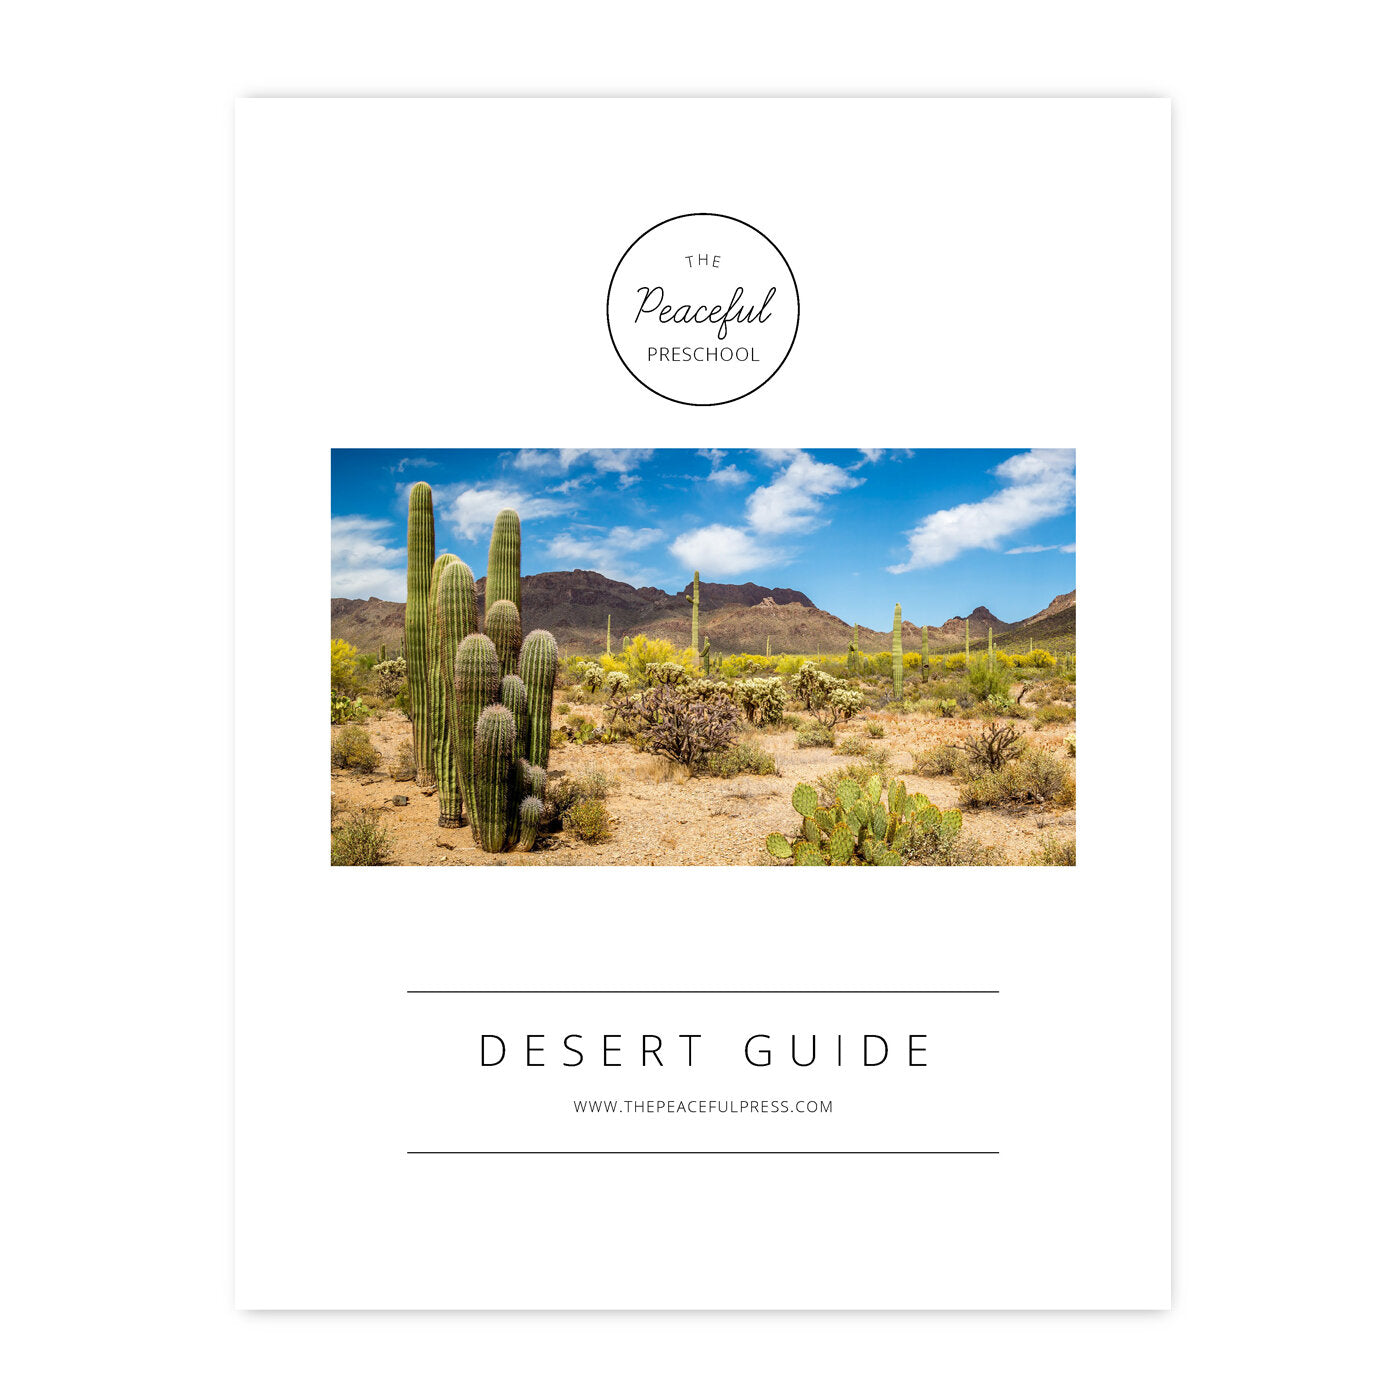 The cover art of the homeschool four week "Desert Guide"